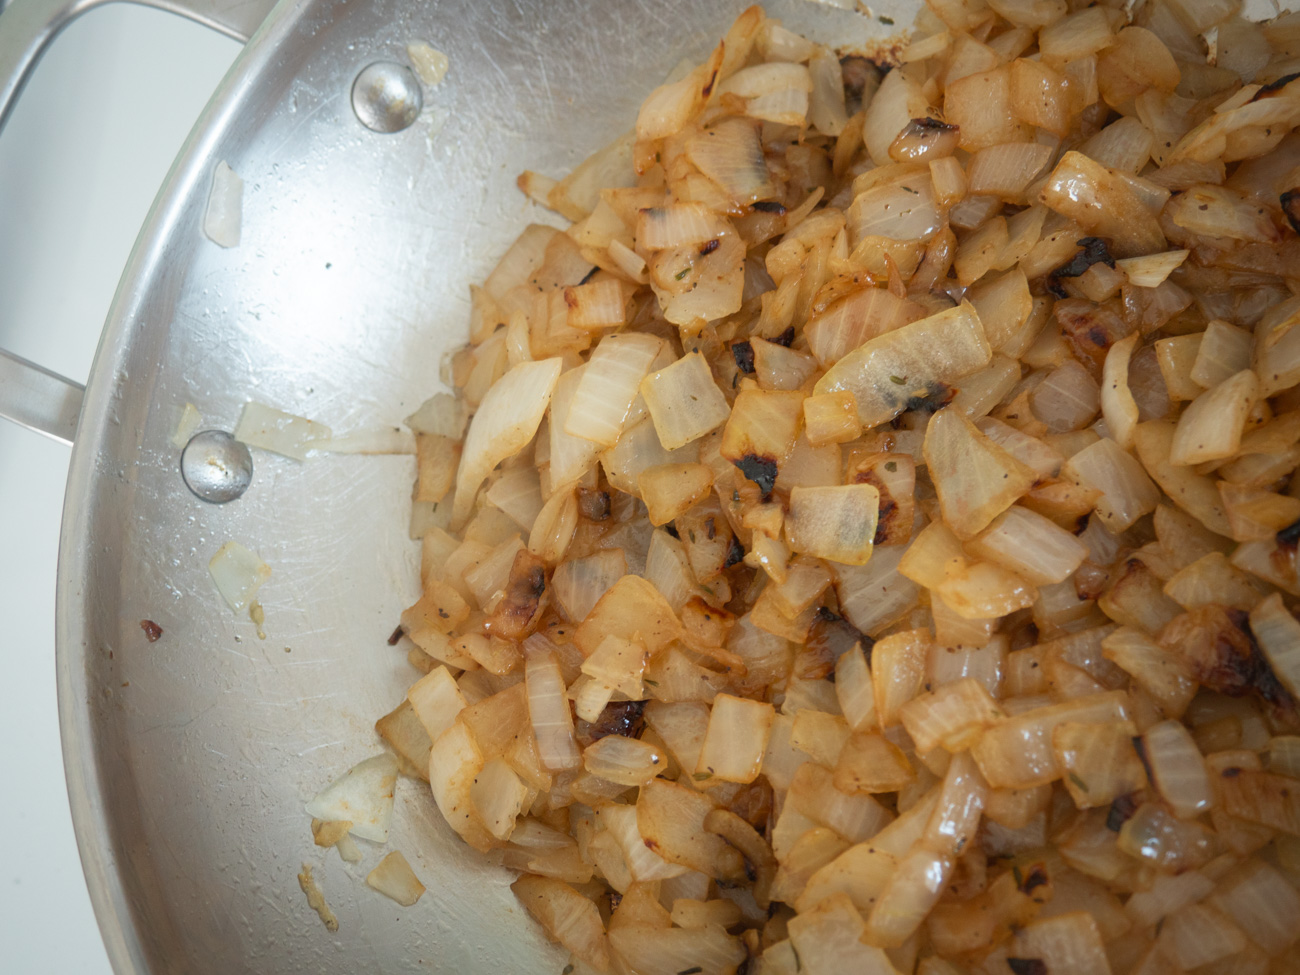 Caramelized Onion Dip
